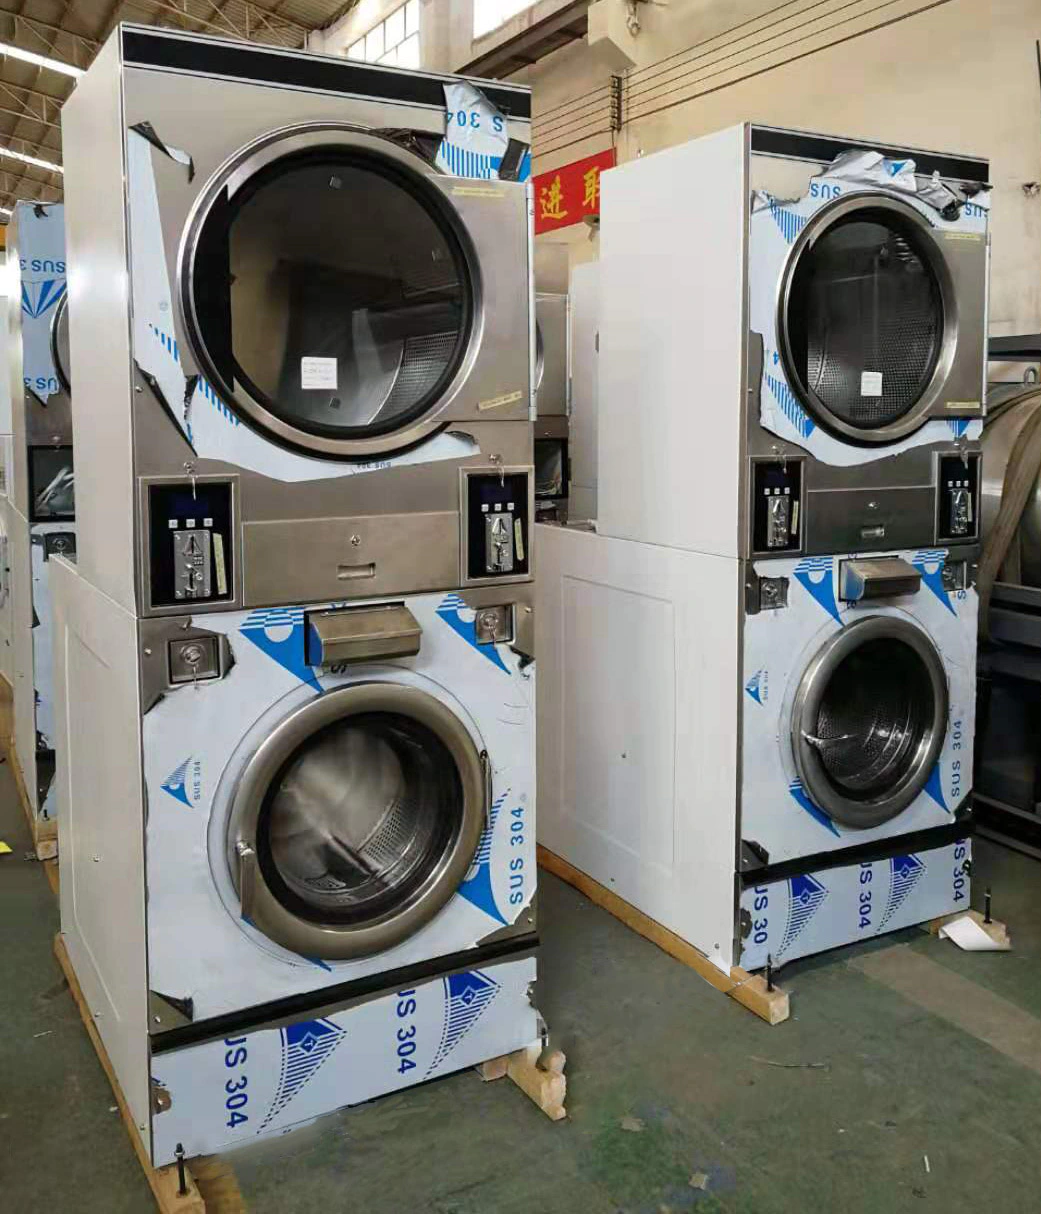 GOWORLD companyfire self service washing machine for service-service center